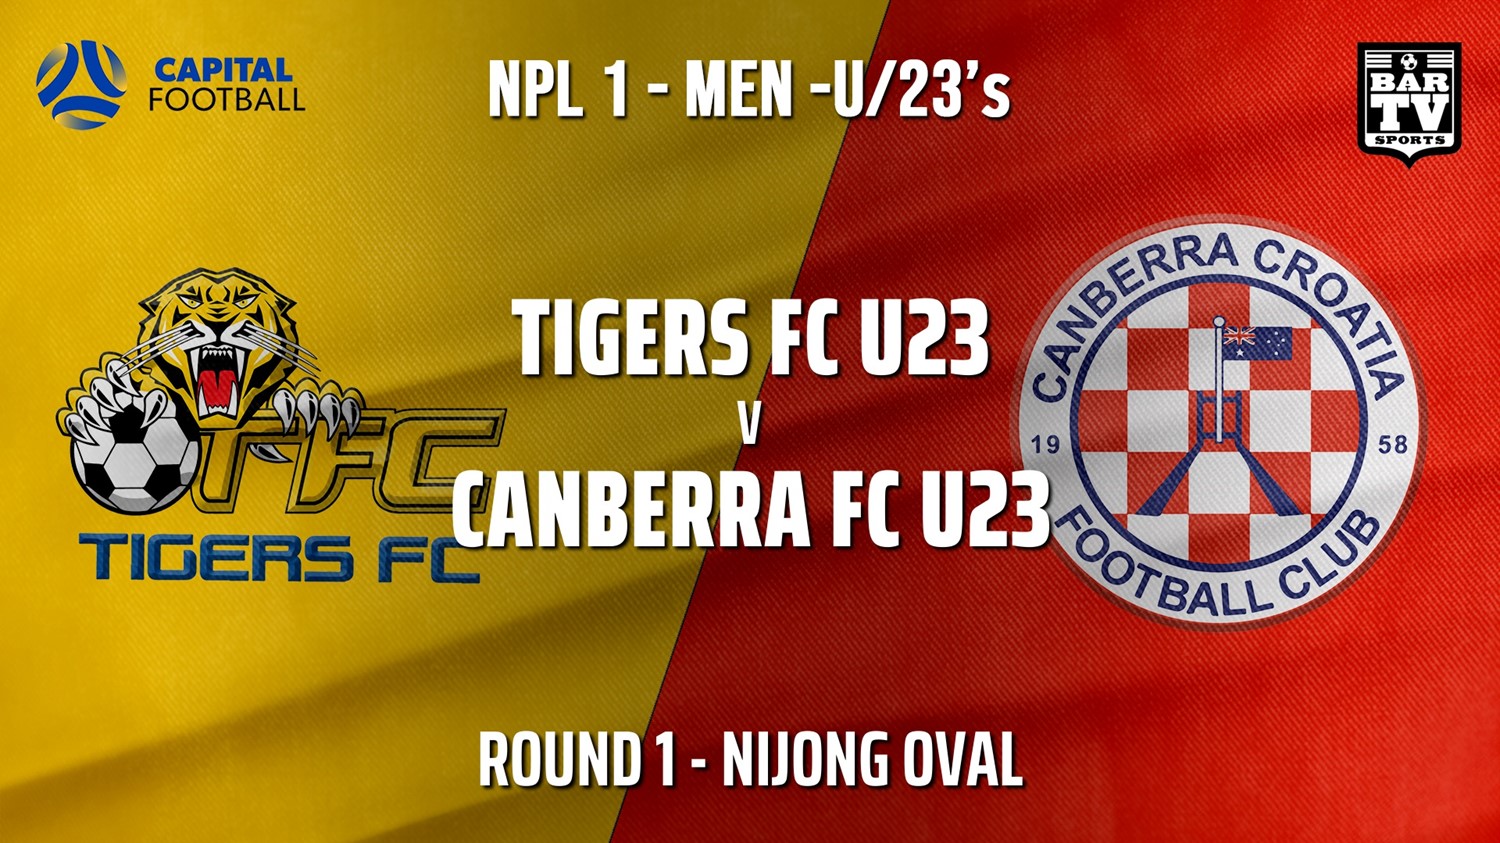 NPL1 Men - U23 - Capital Football  Round 1 - Tigers FC U23 v Canberra FC U23 Minigame Slate Image